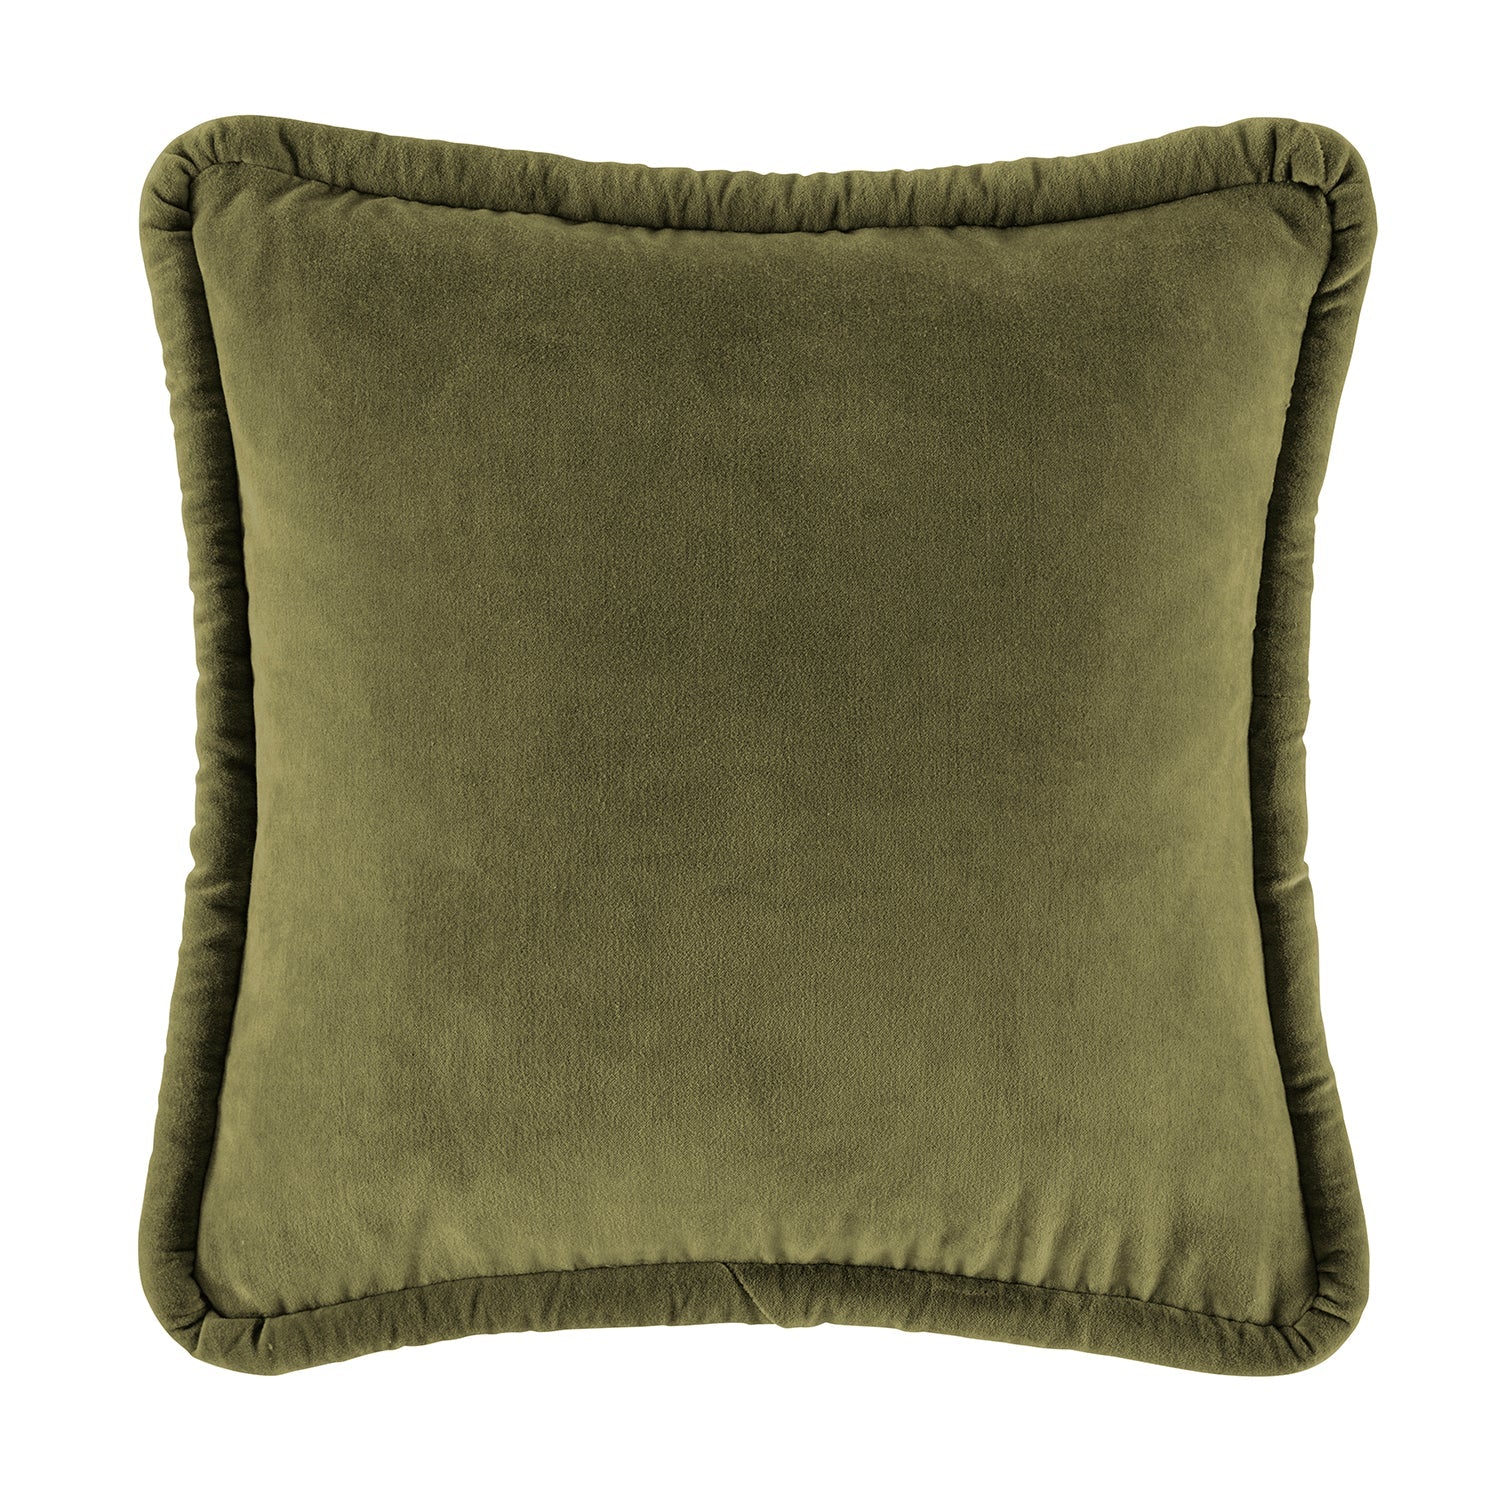 Pascale Cushion Cushion KAS AUSTRALIA Olive Square 50x50cm